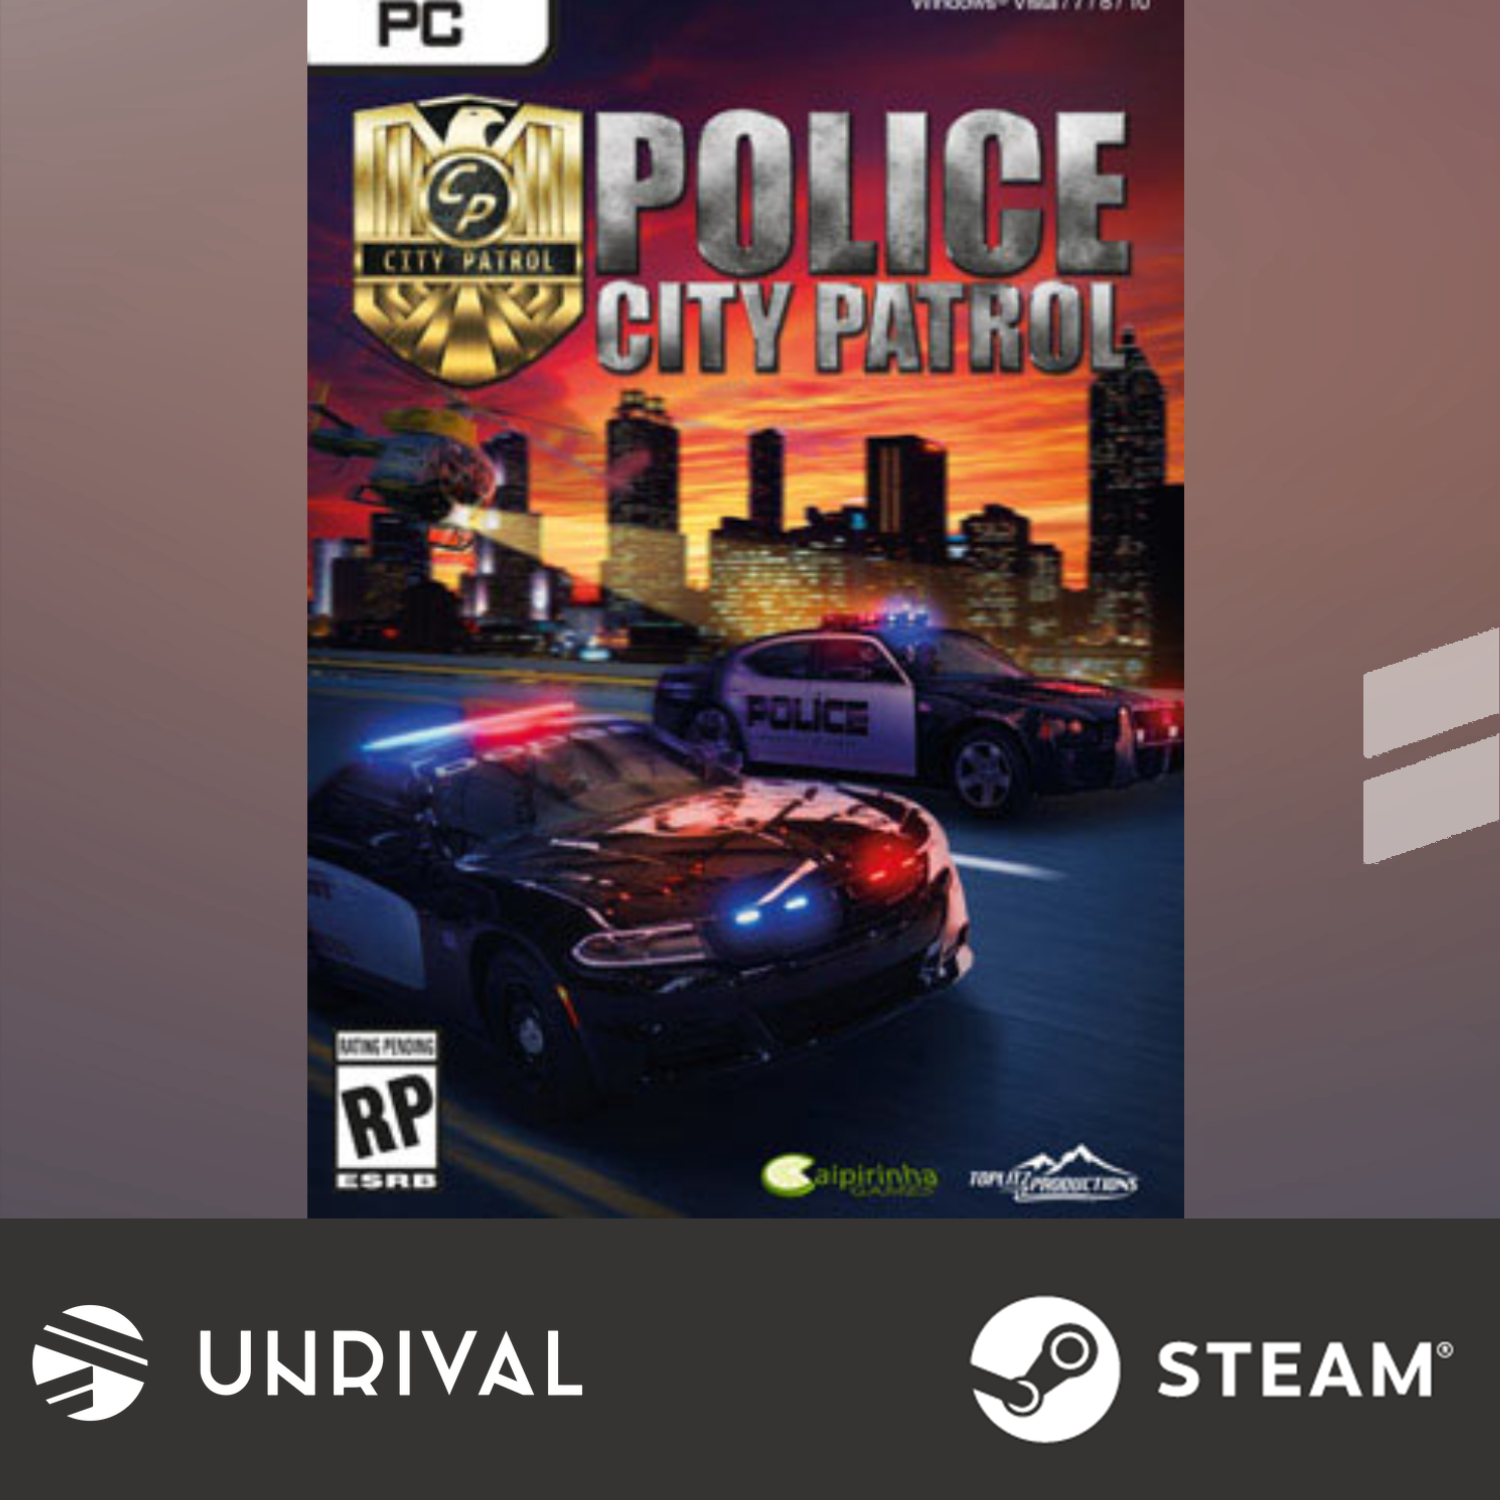 [Hot Sale] City Patrol: Police PC Digital Download Game (Single Player) - Unrival